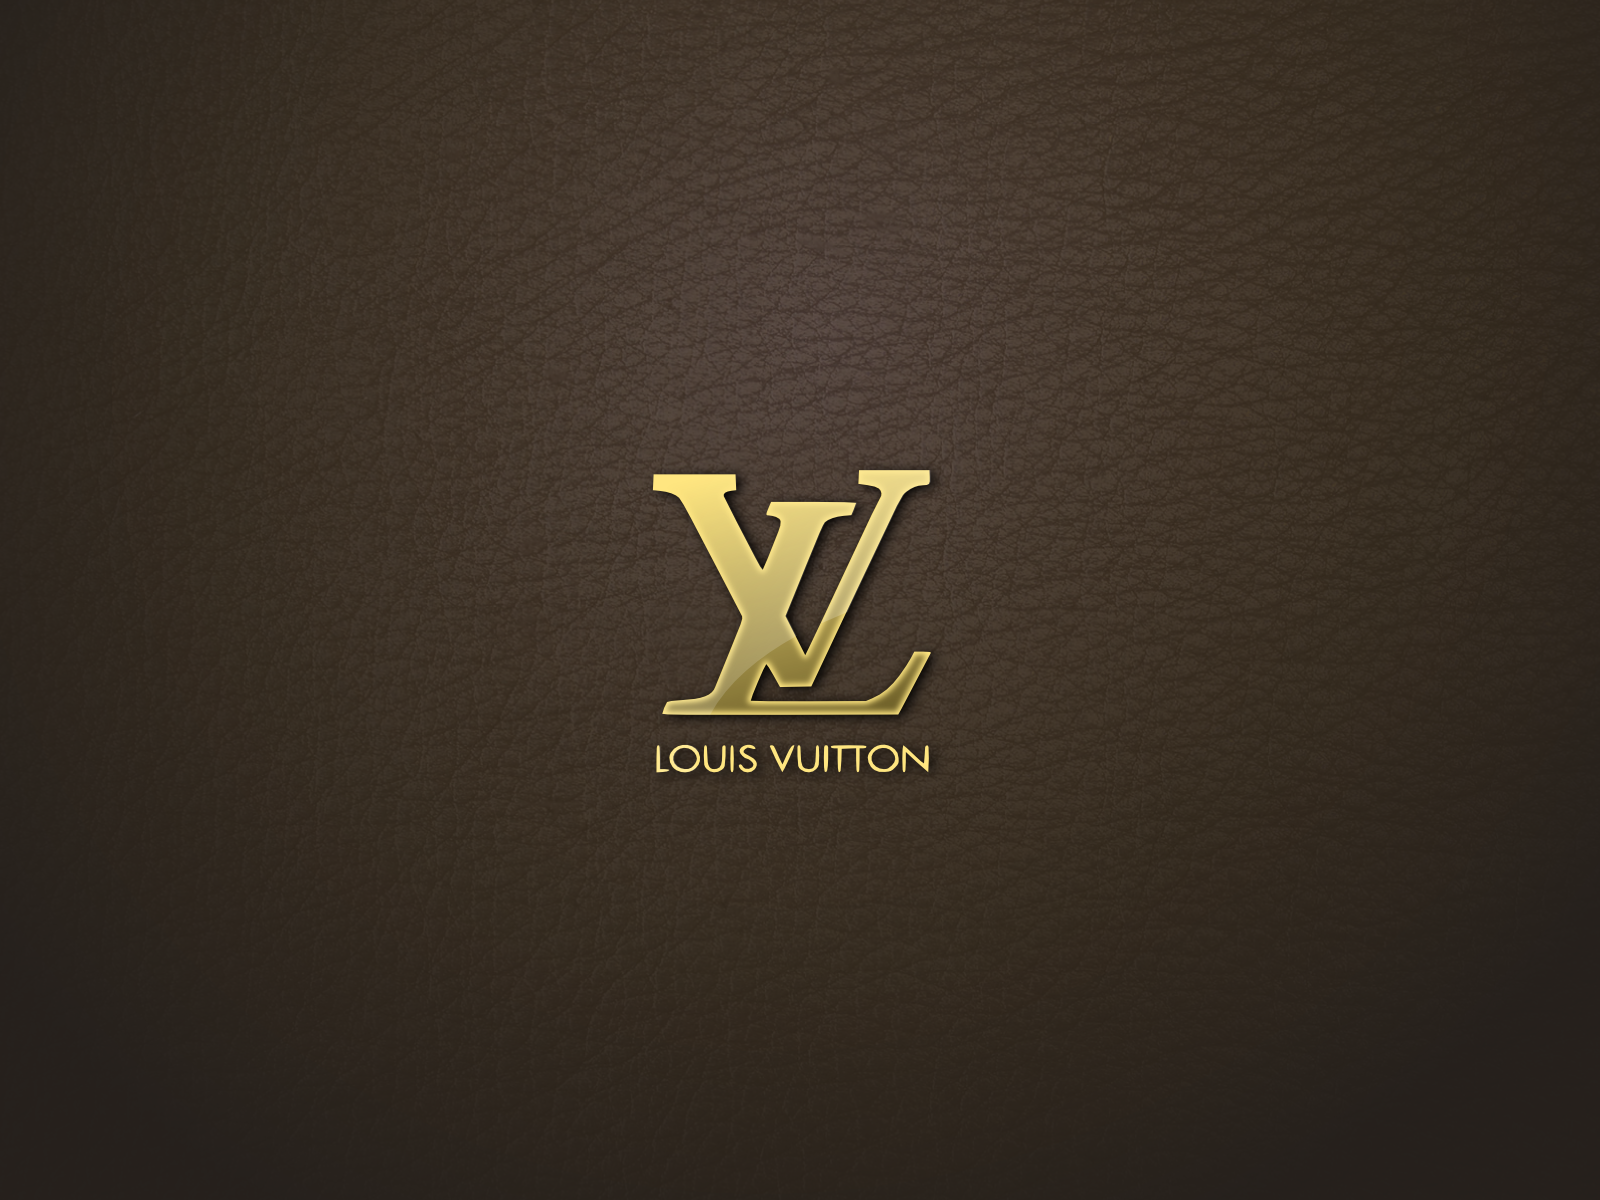 [33+] Louis Vuitton iPhone Wallpaper on WallpaperSafari